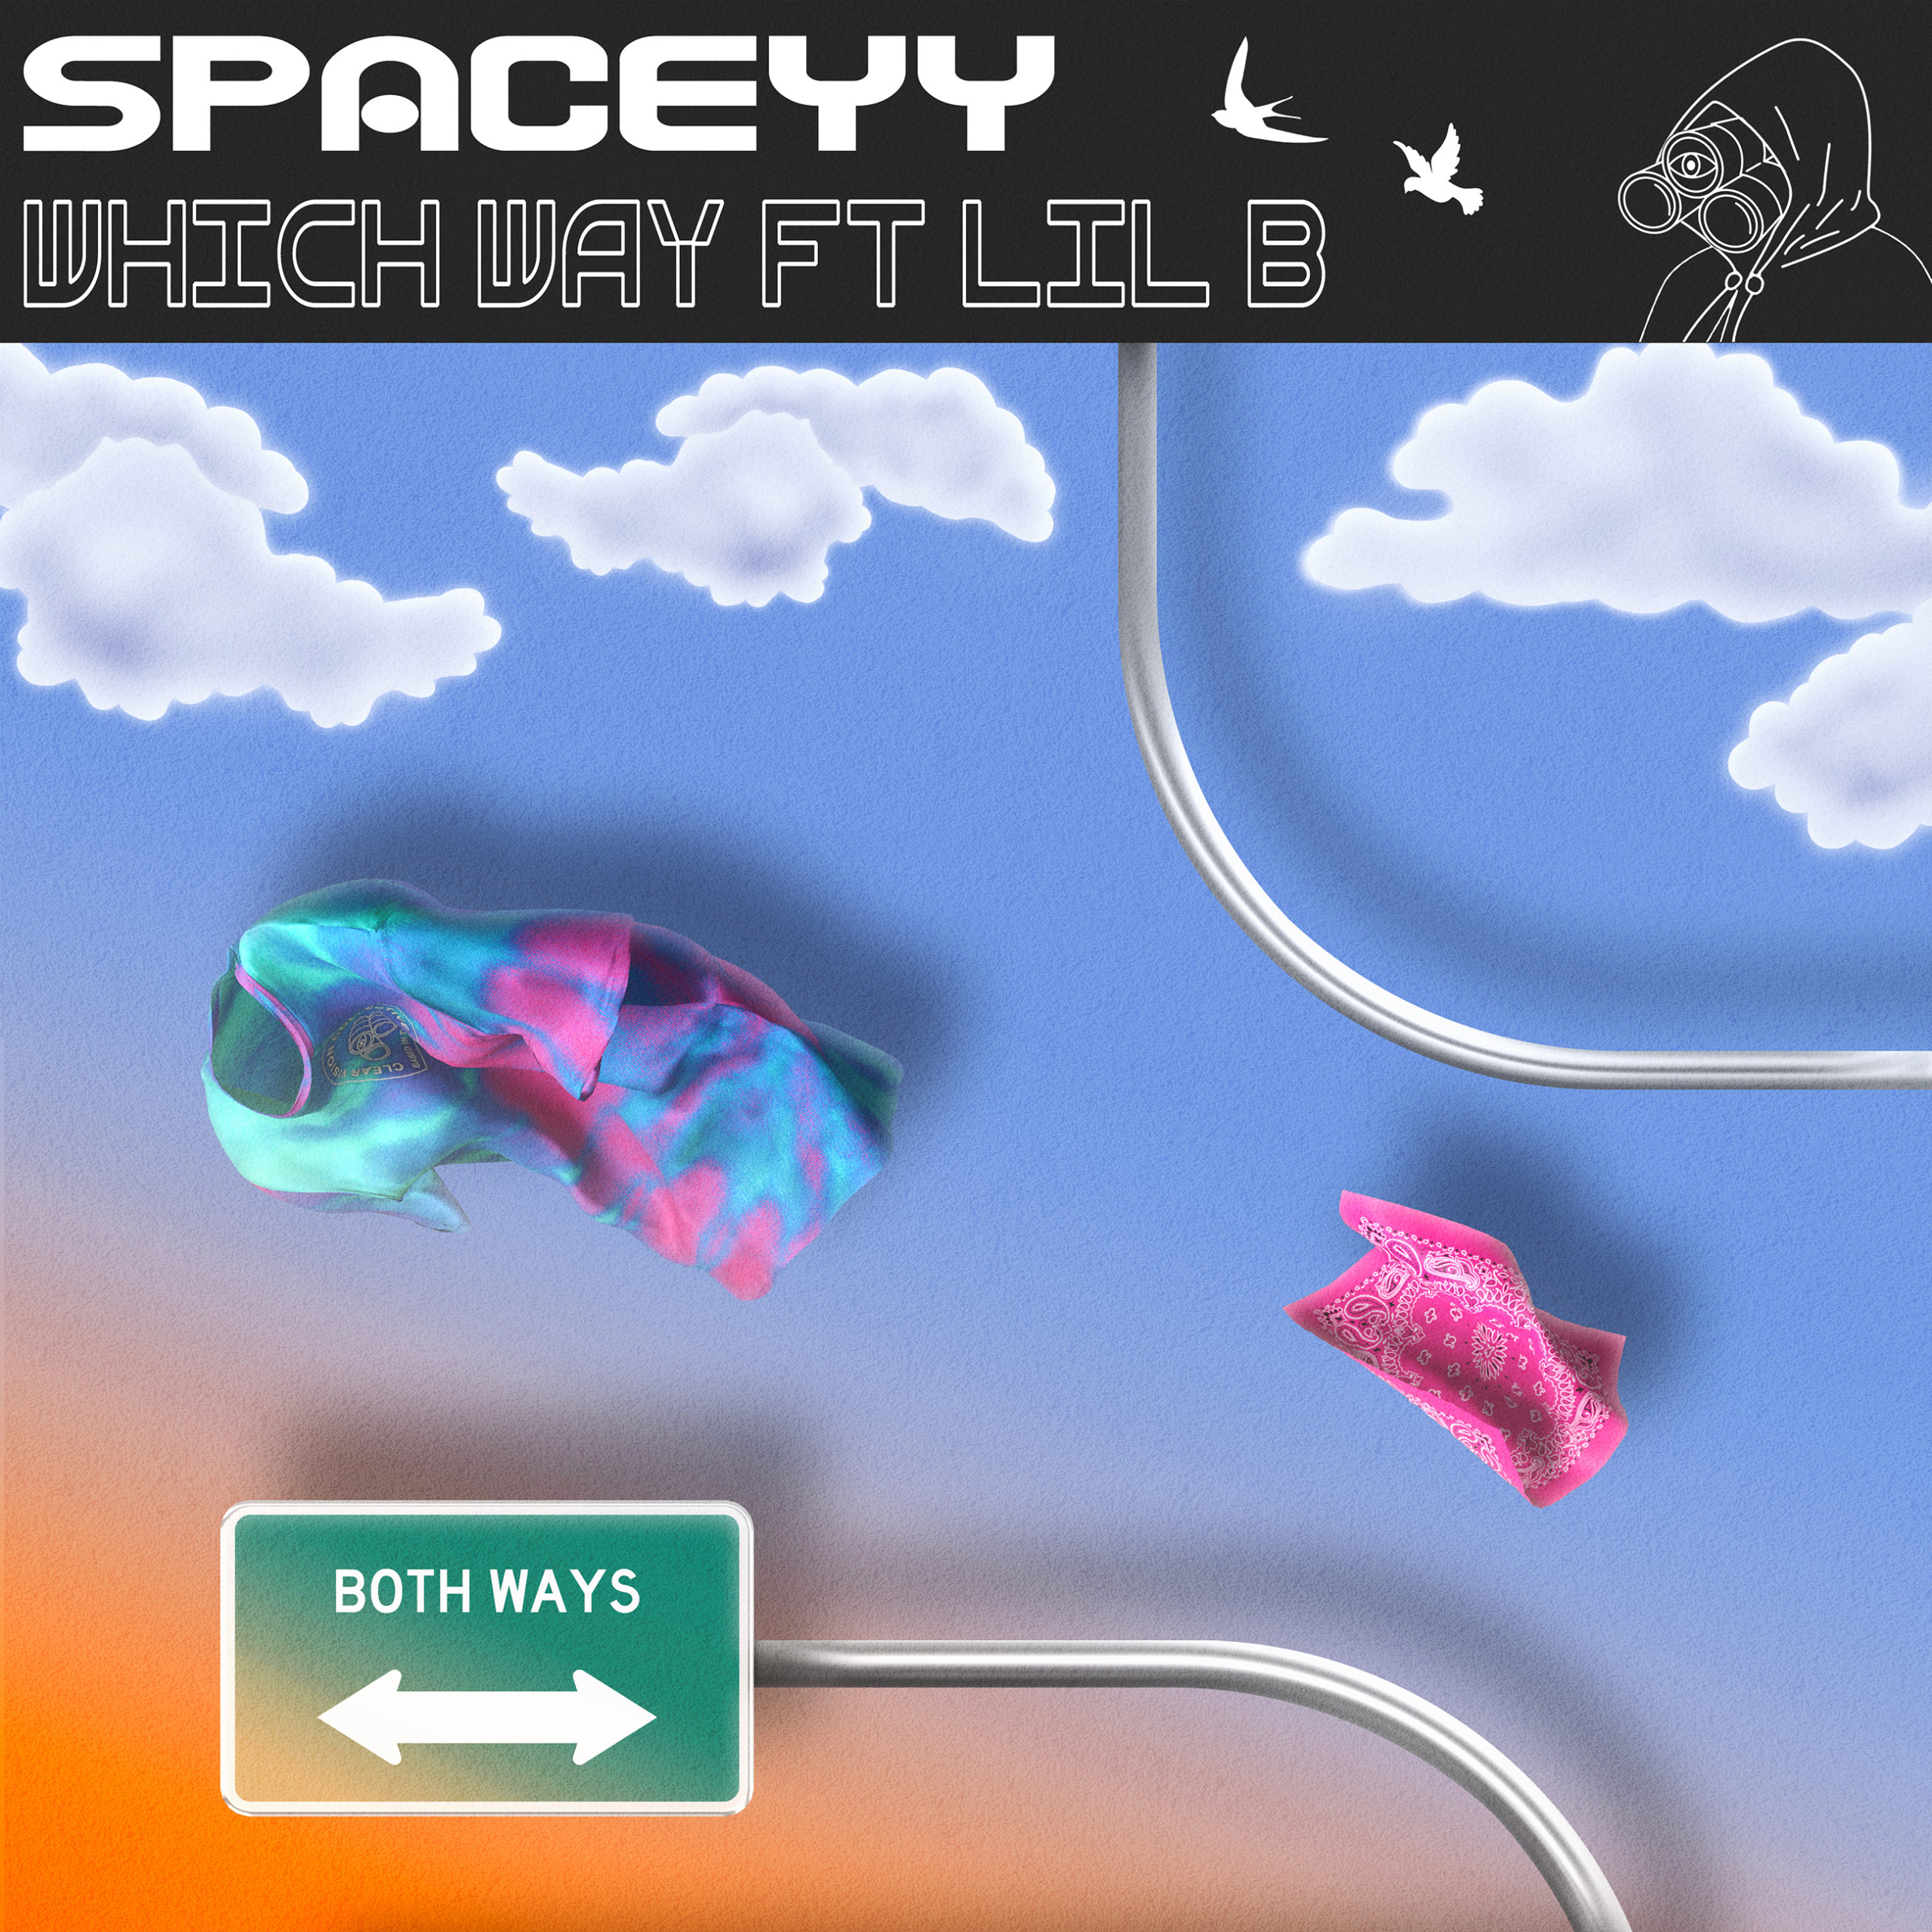 Which Way Spaceyy feat. Lil B single cover illustration - Remy Lewandowski